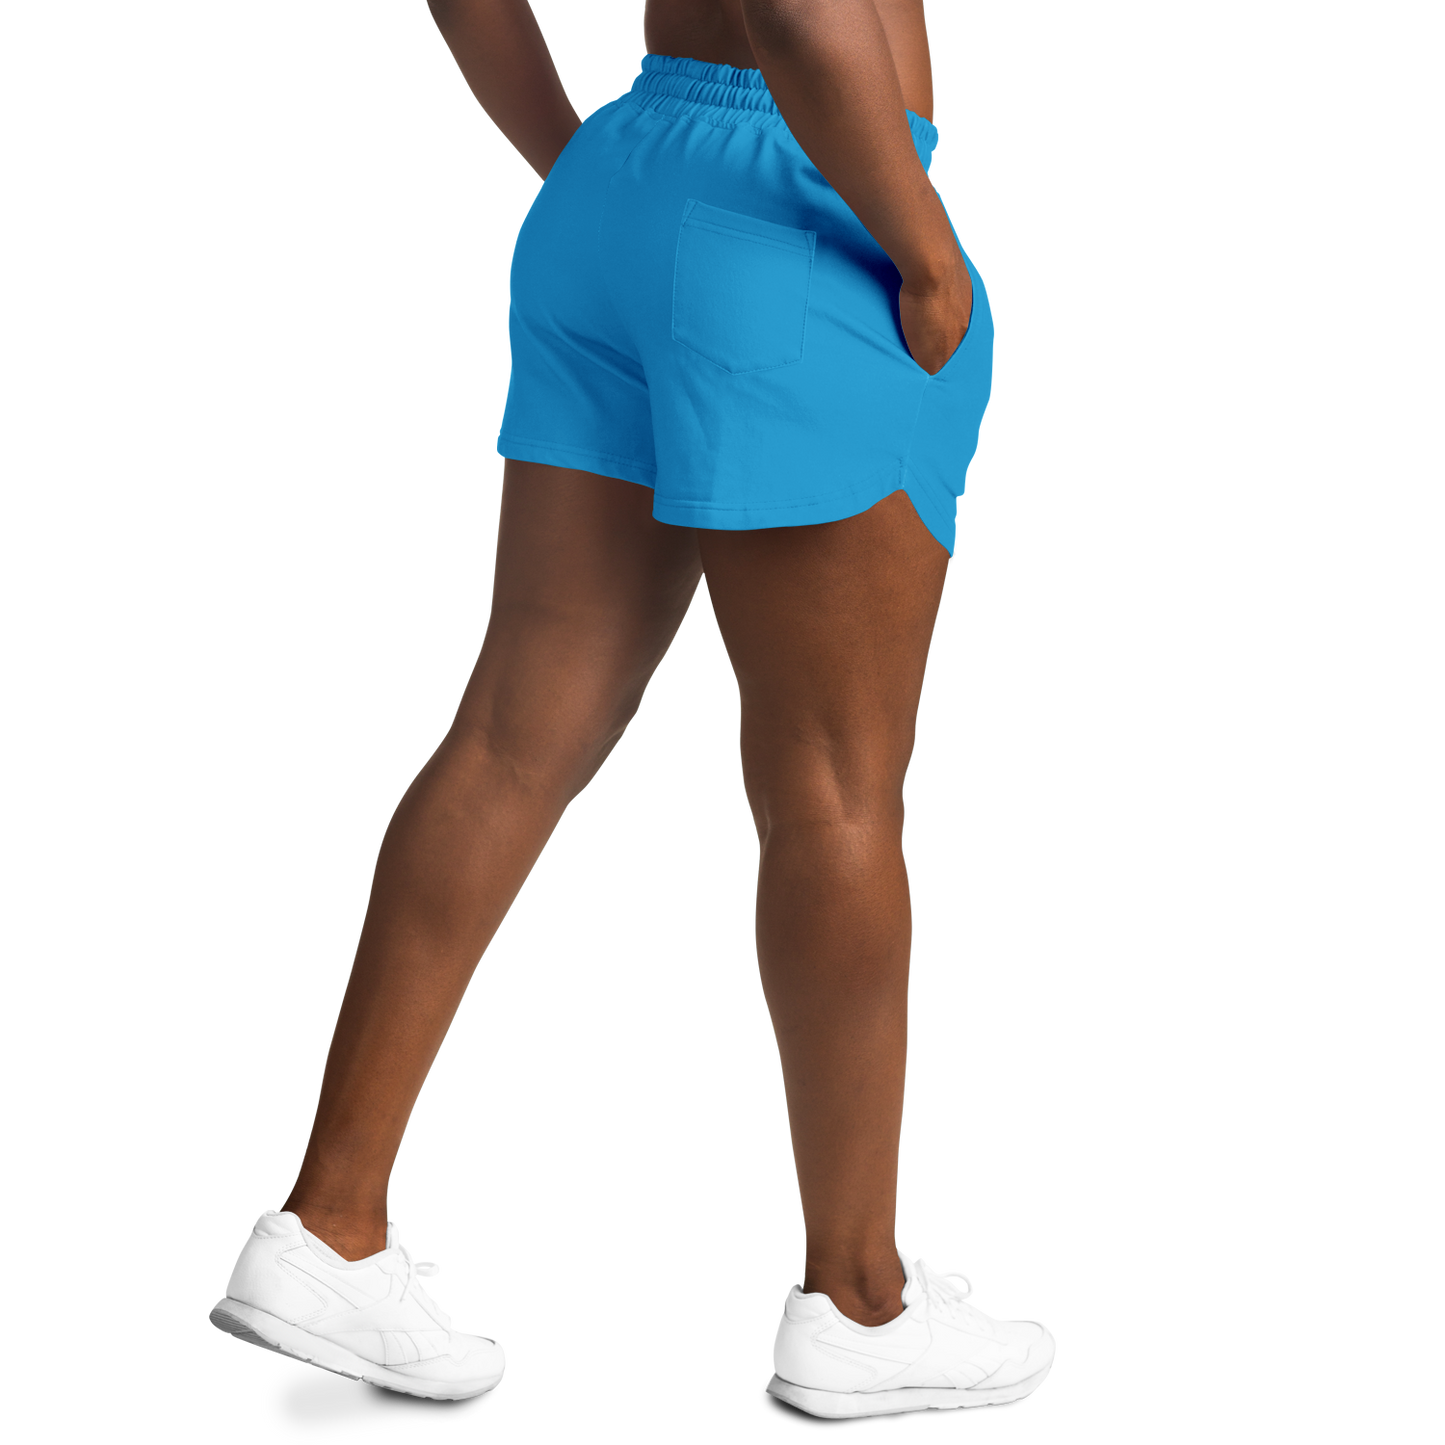 Miami Women's Blue Shorts